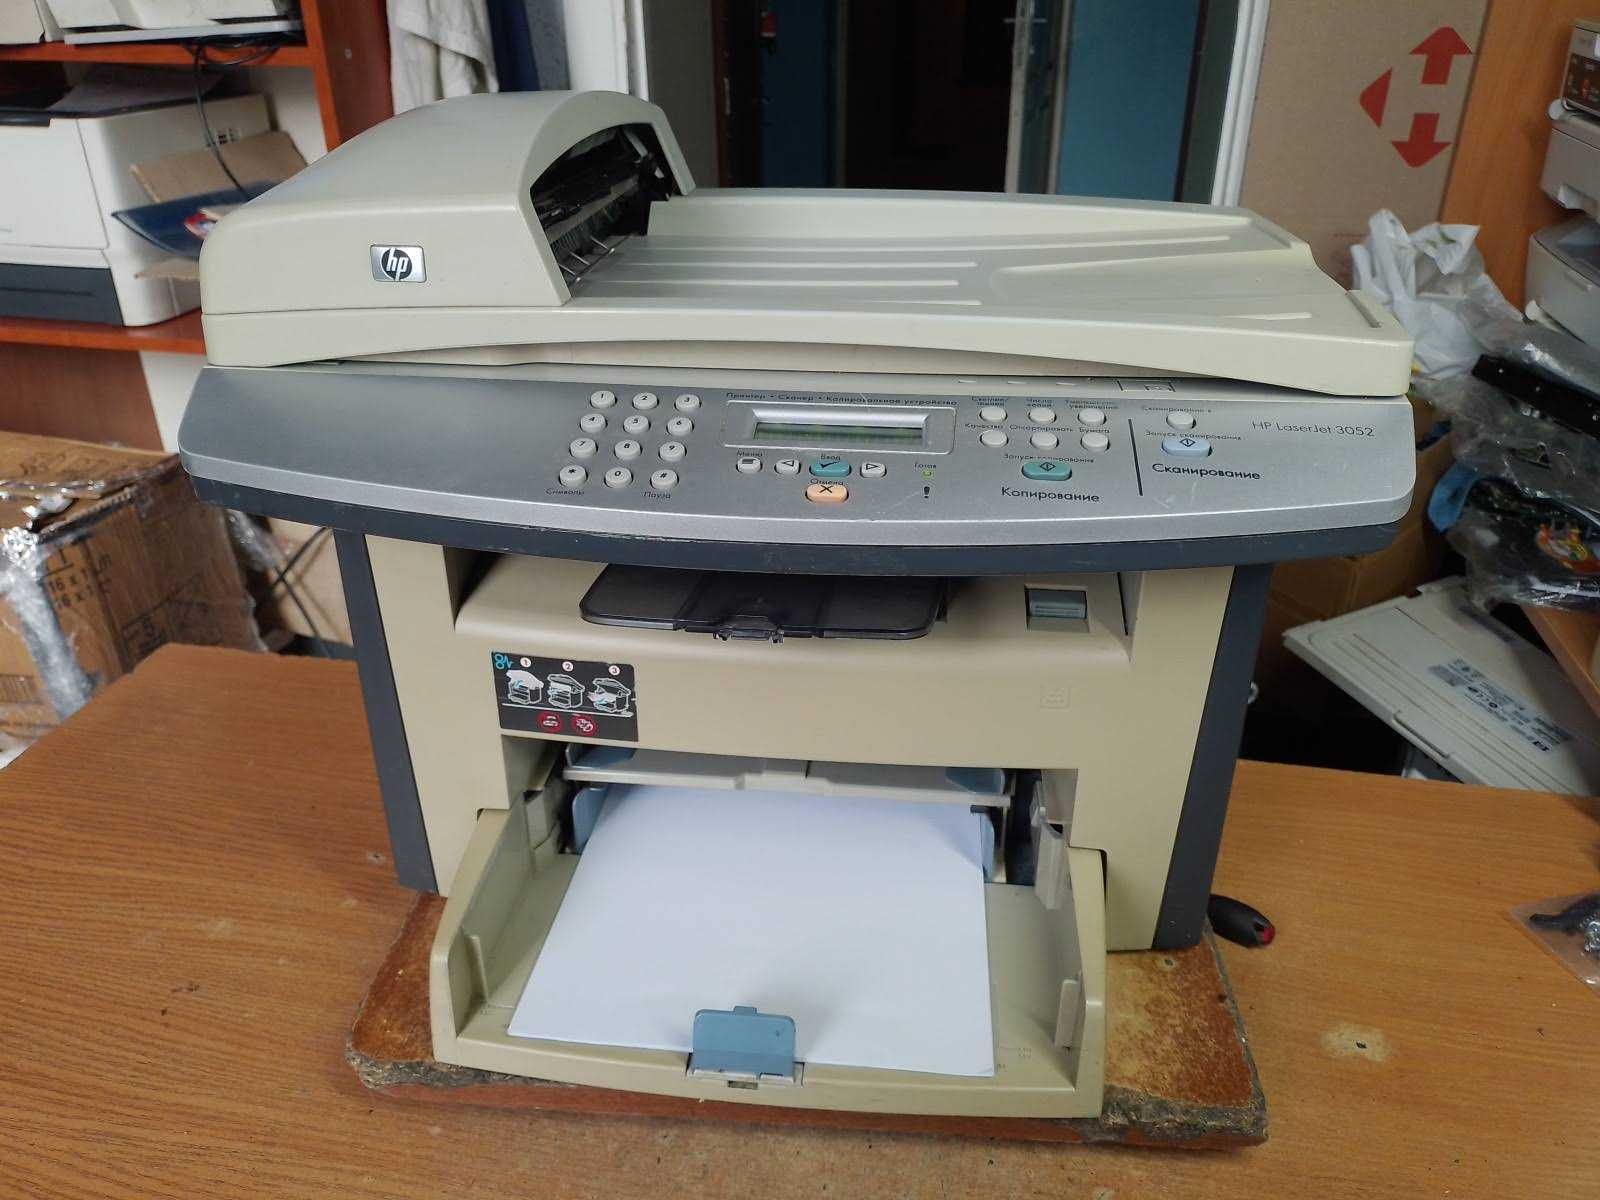 Лазерное МФУ HP LaserJet 3052 (принтер/сканер/копир)